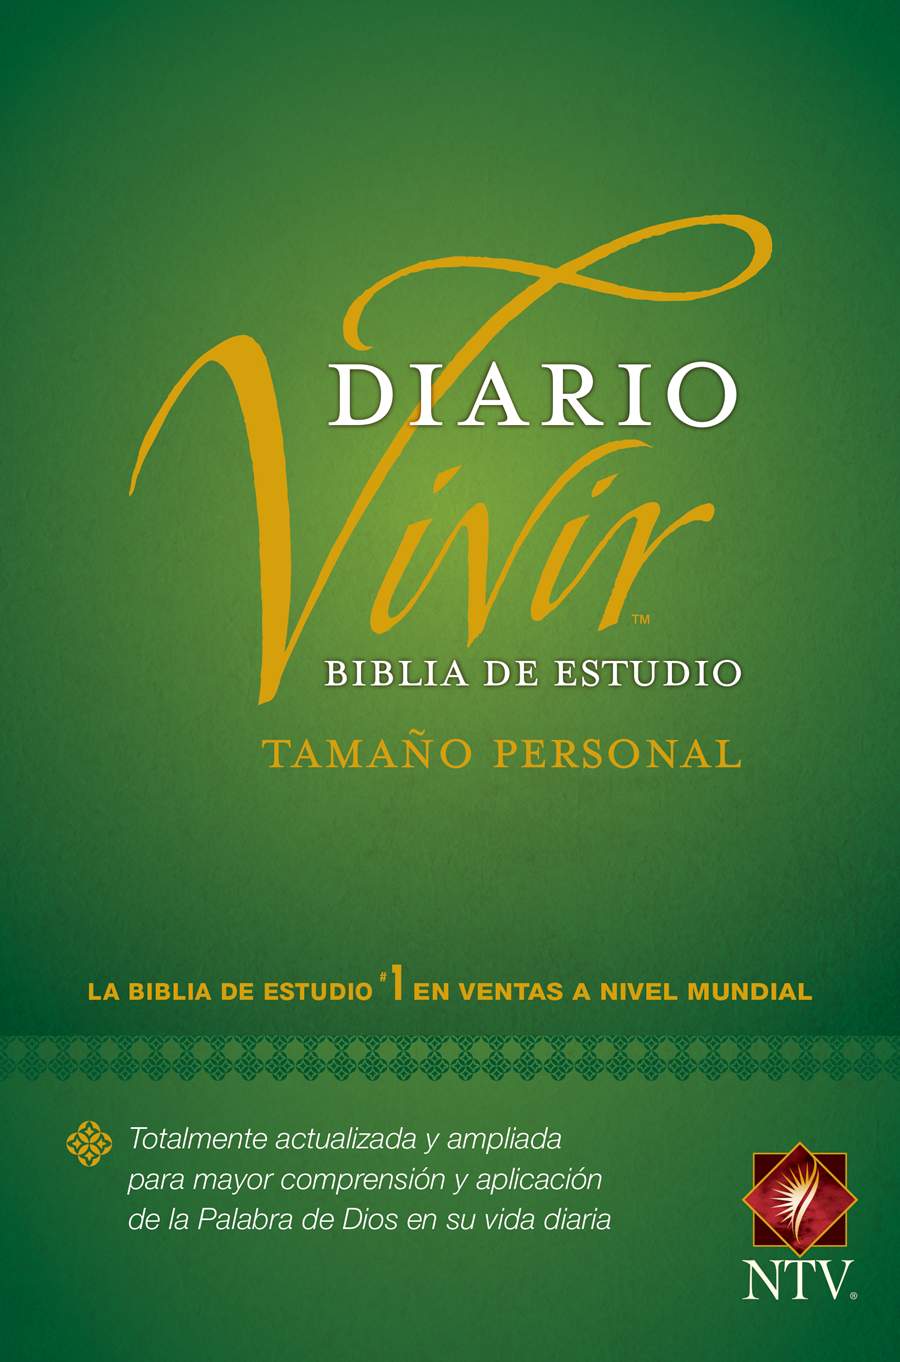 Biblia NTV de Estudio del Diario Vivir - Tamaño Personal - Tapa Dura